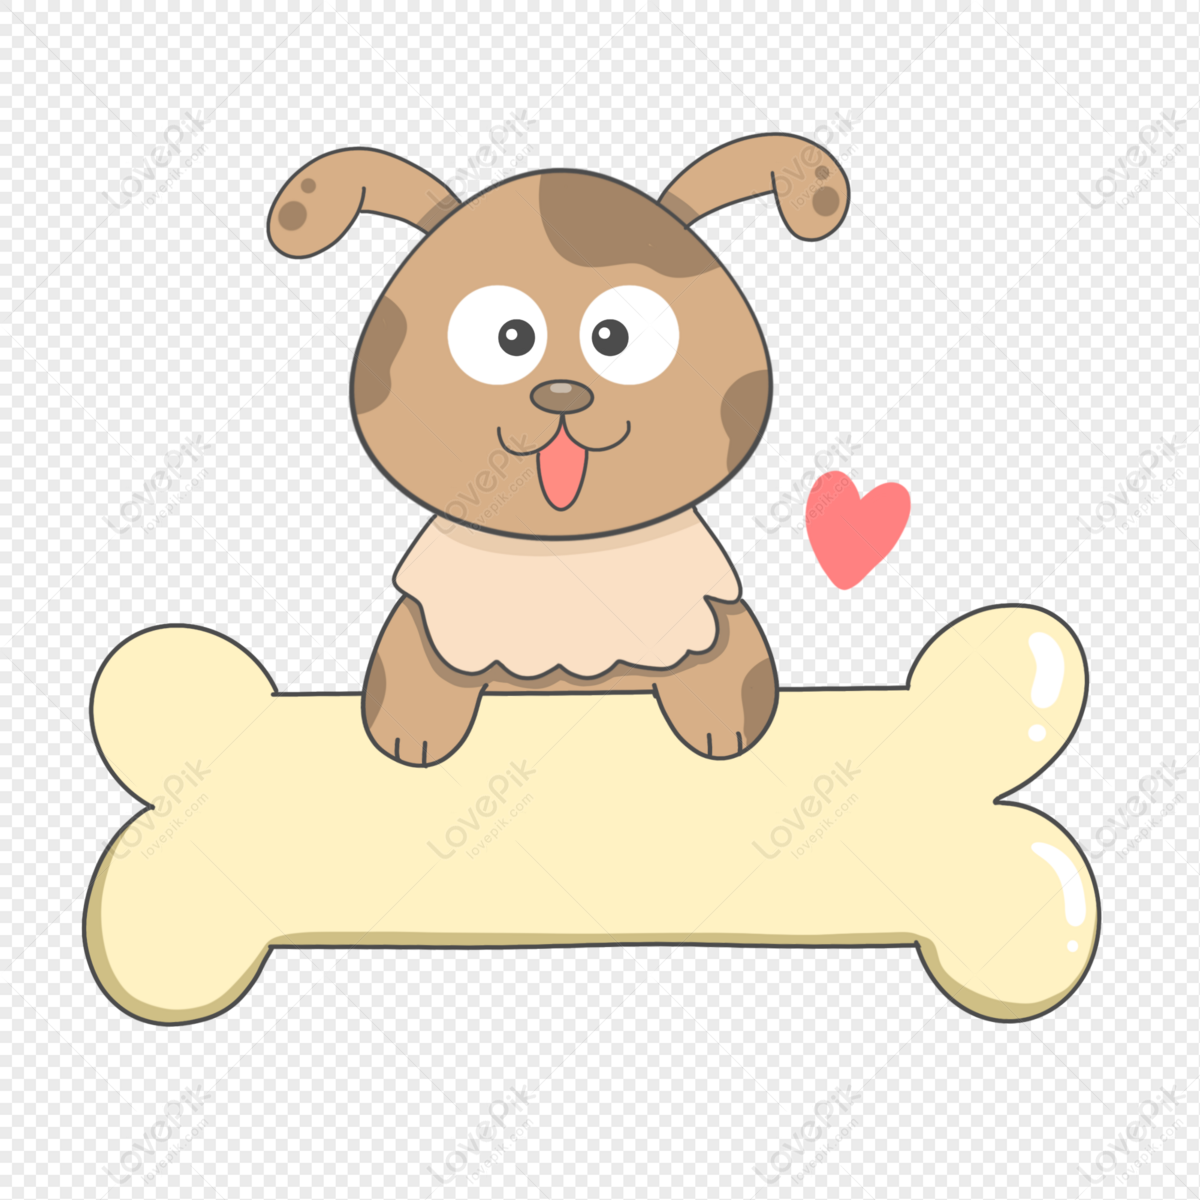 Cartoon Animal Dog Big Bone Border PNG Image And Clipart Image For Free  Download - Lovepik | 401491578